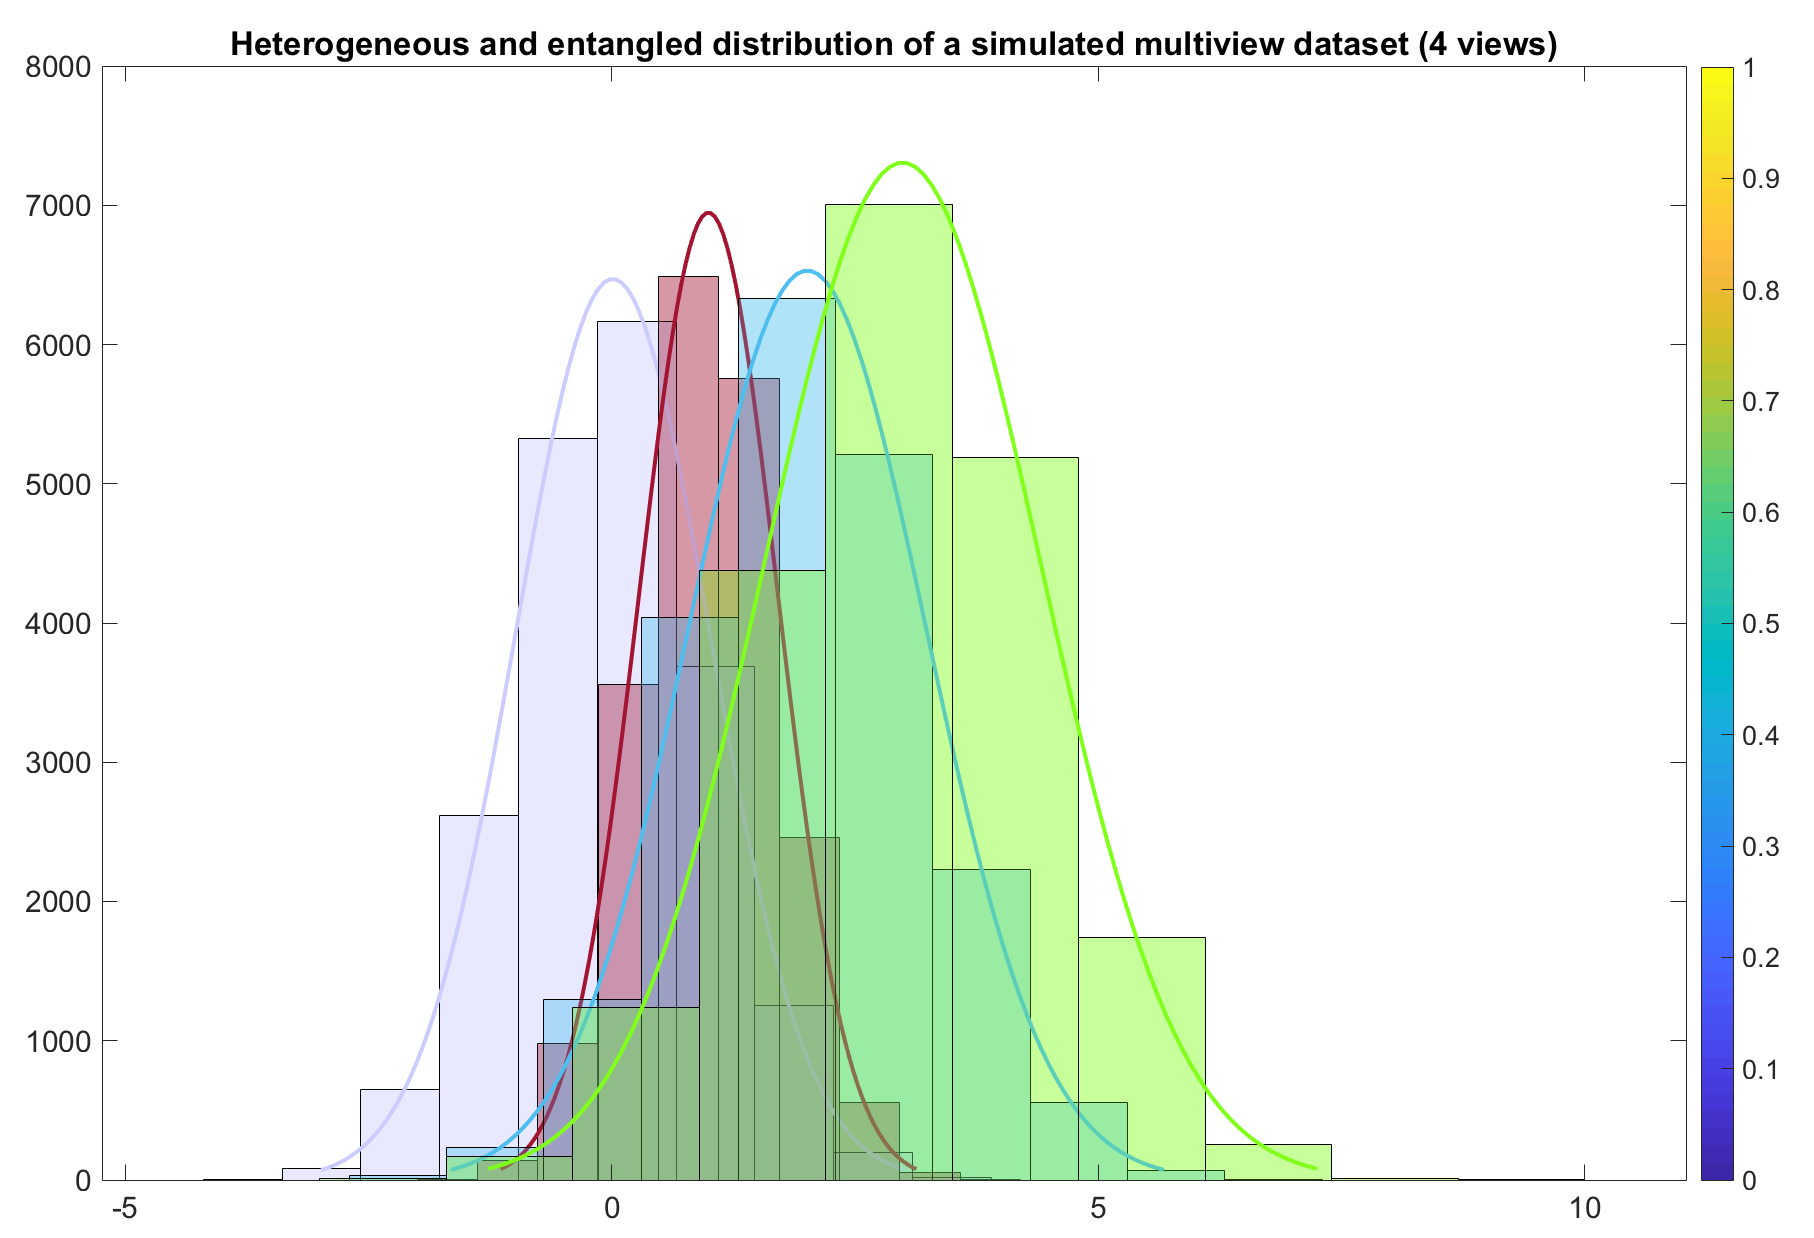 Simulated heterogeneous multi-view dataset